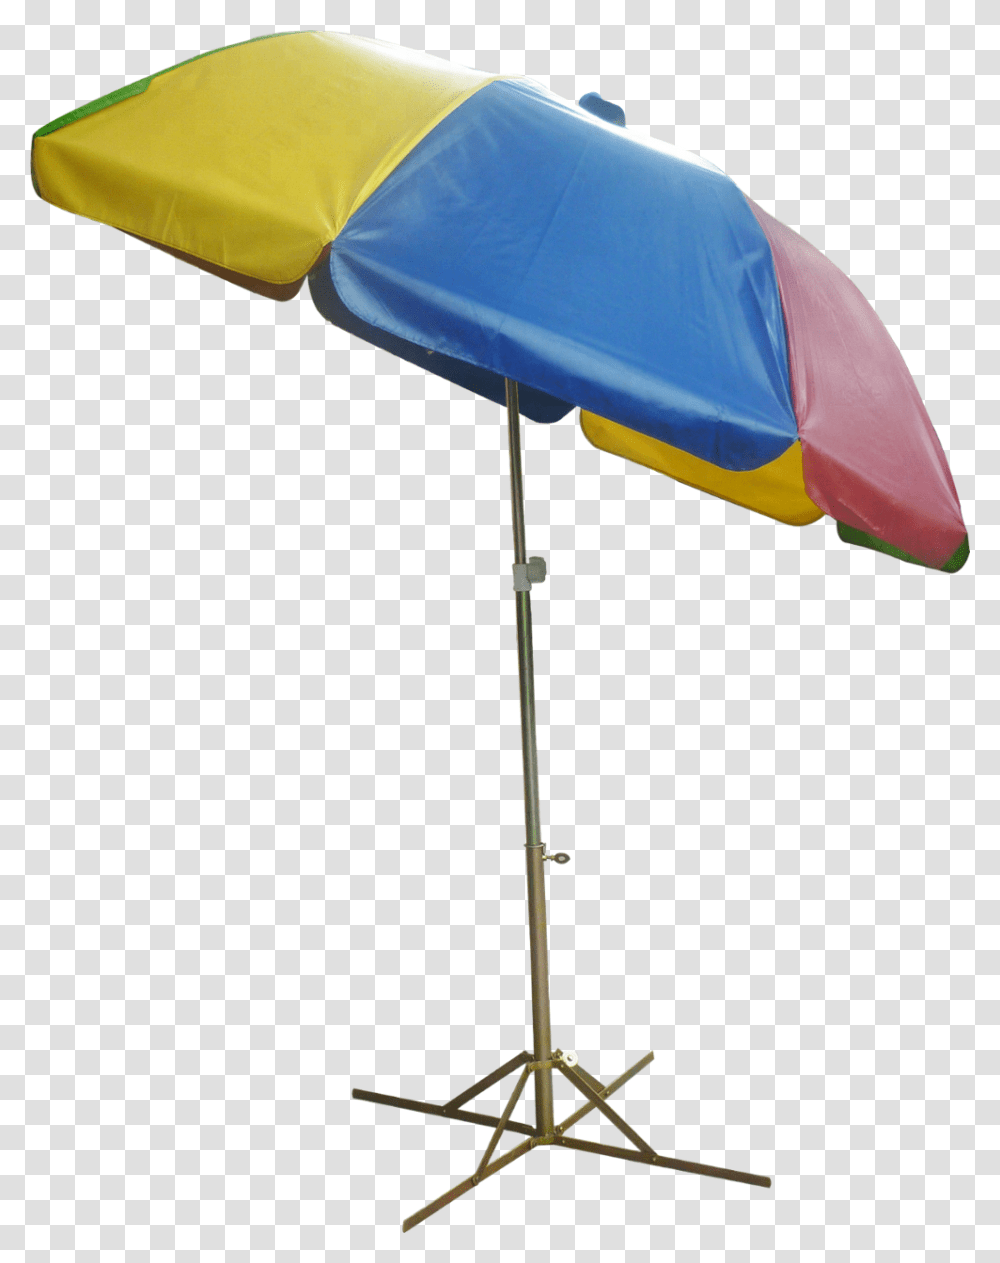 Round Umbrella Umbrella, Lamp, Patio Umbrella, Garden Umbrella, Canopy Transparent Png